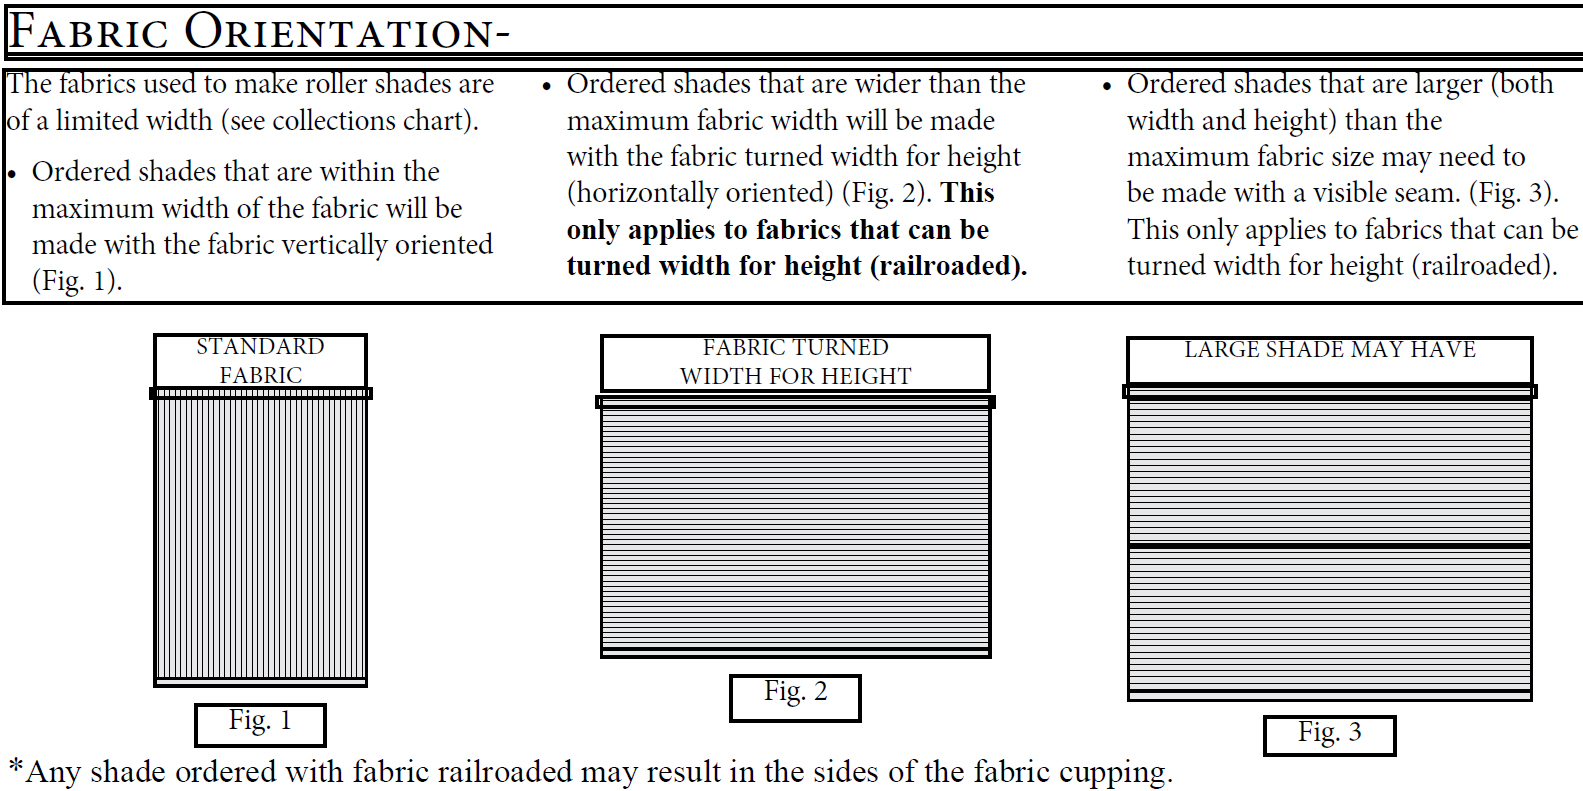 Fabric oriention